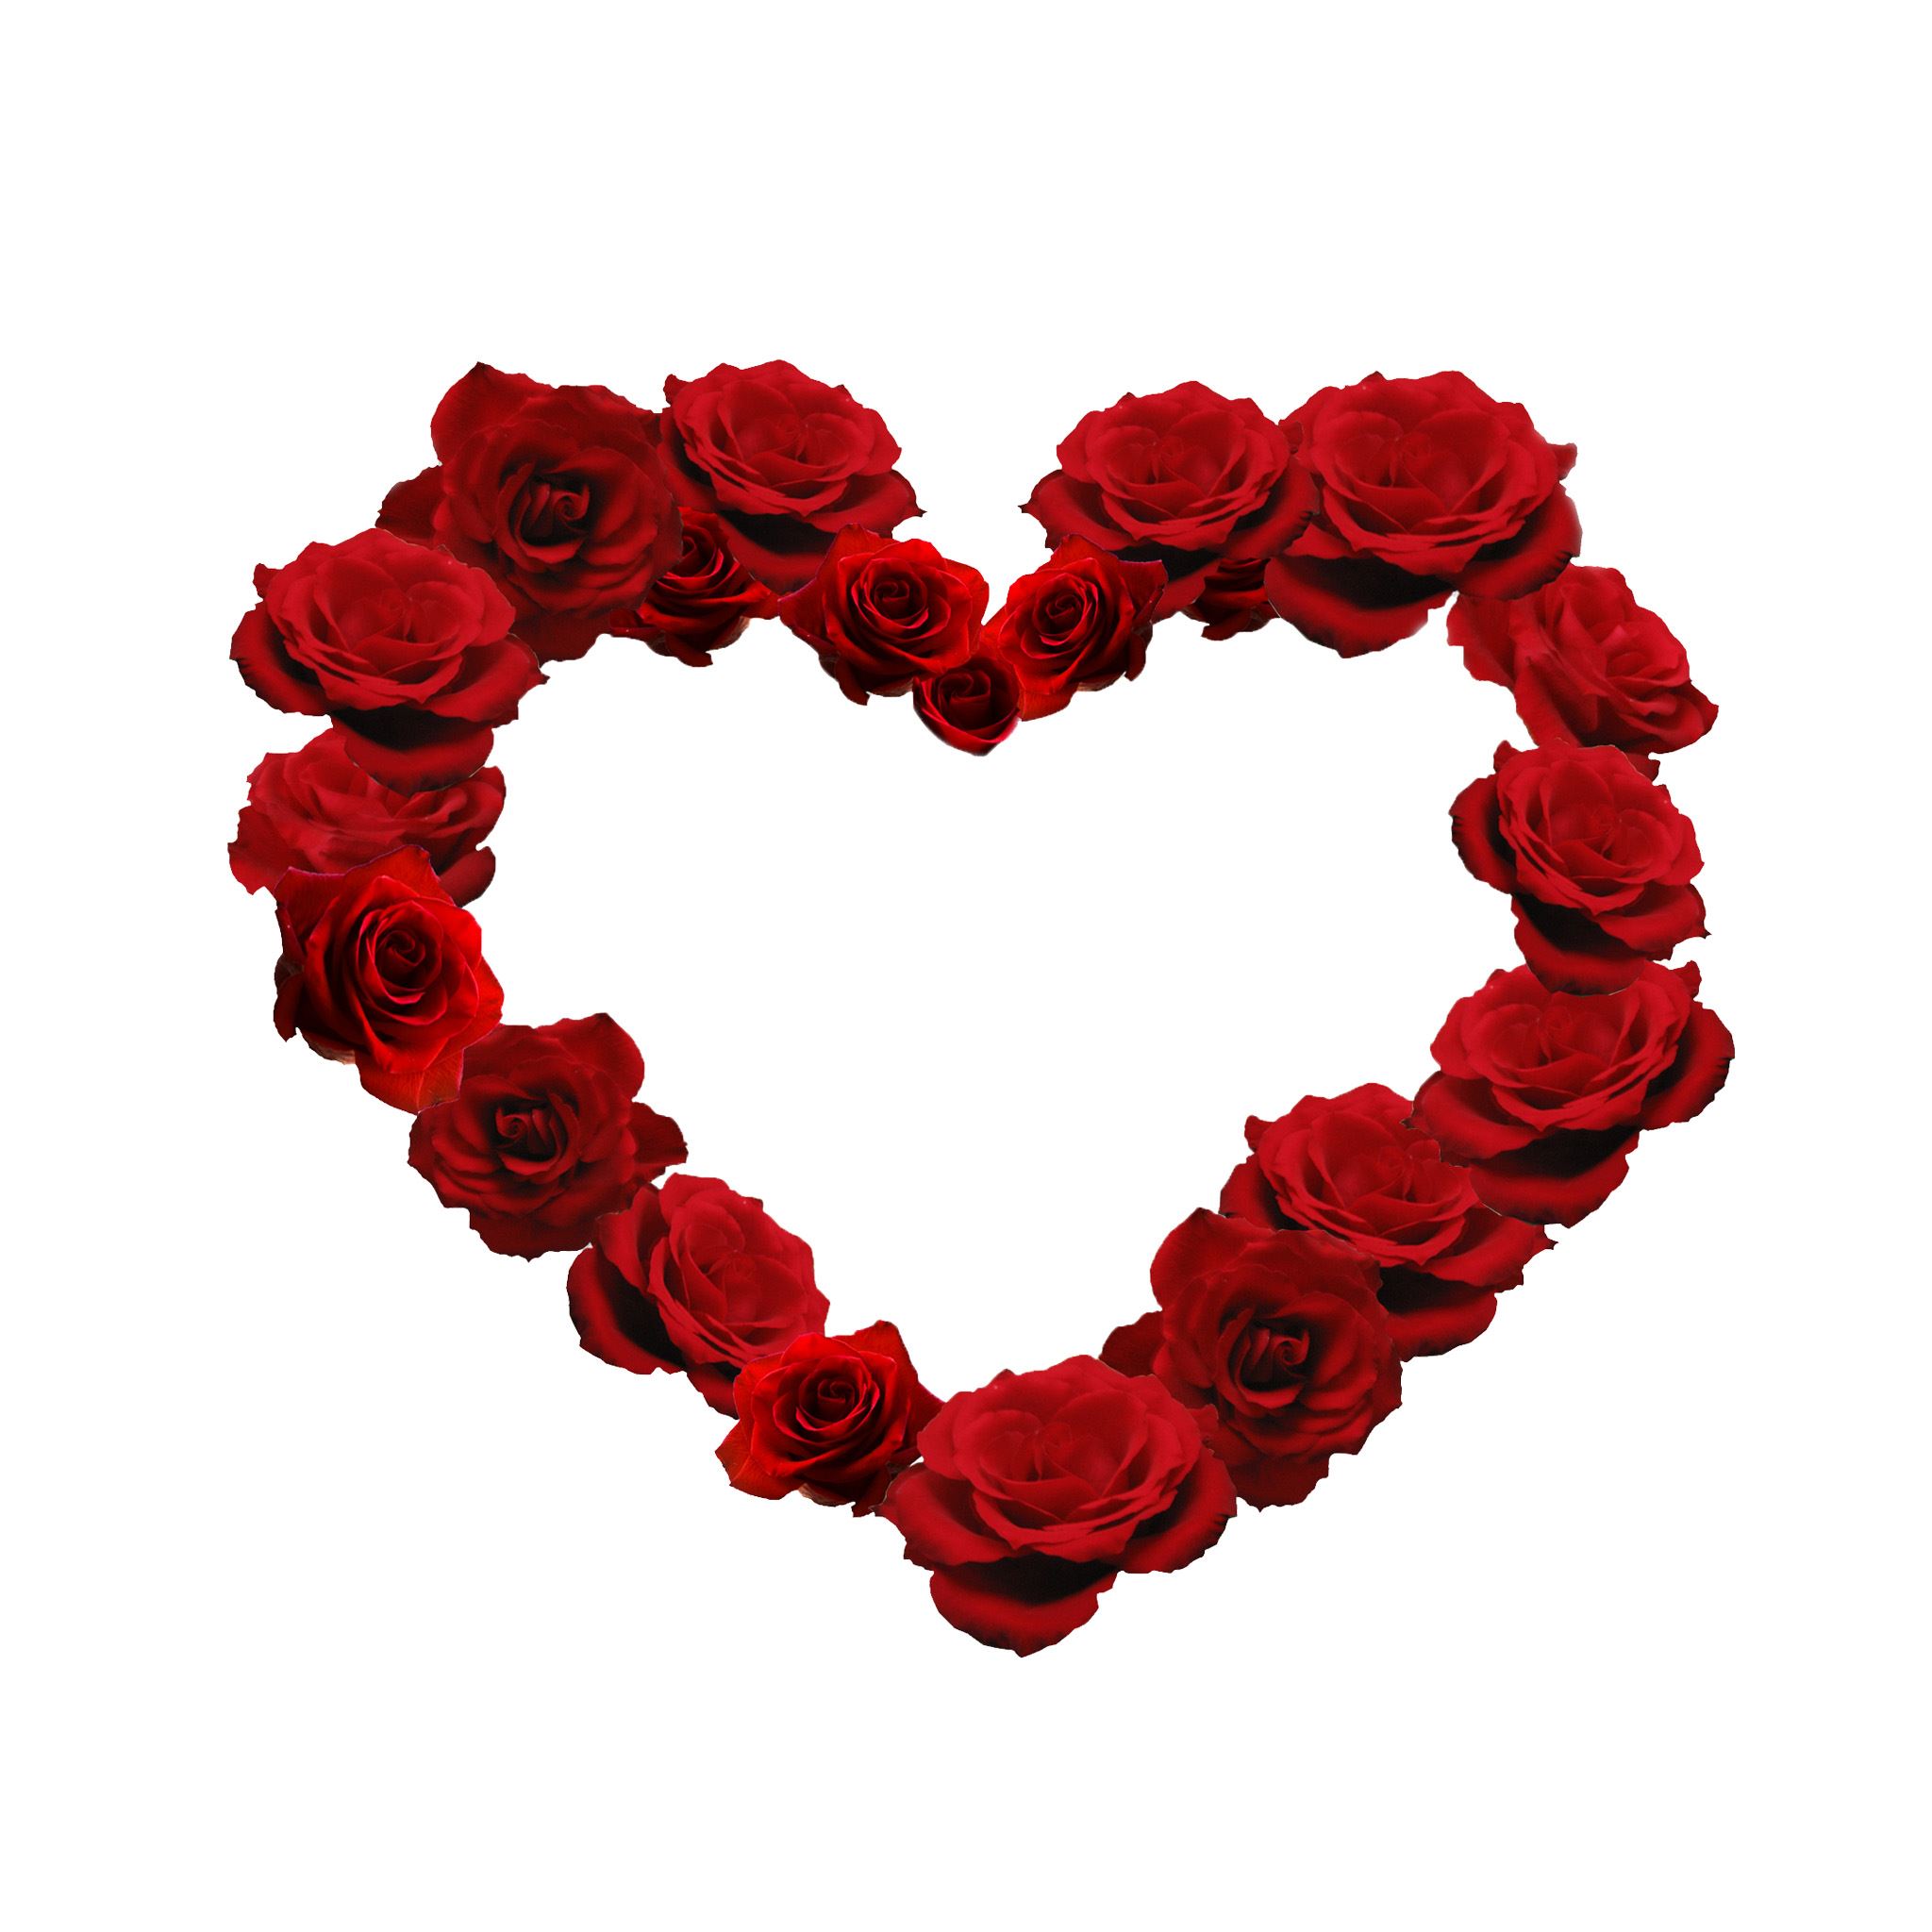 Rose Love Heart iPad Air Wallpapers Free Download